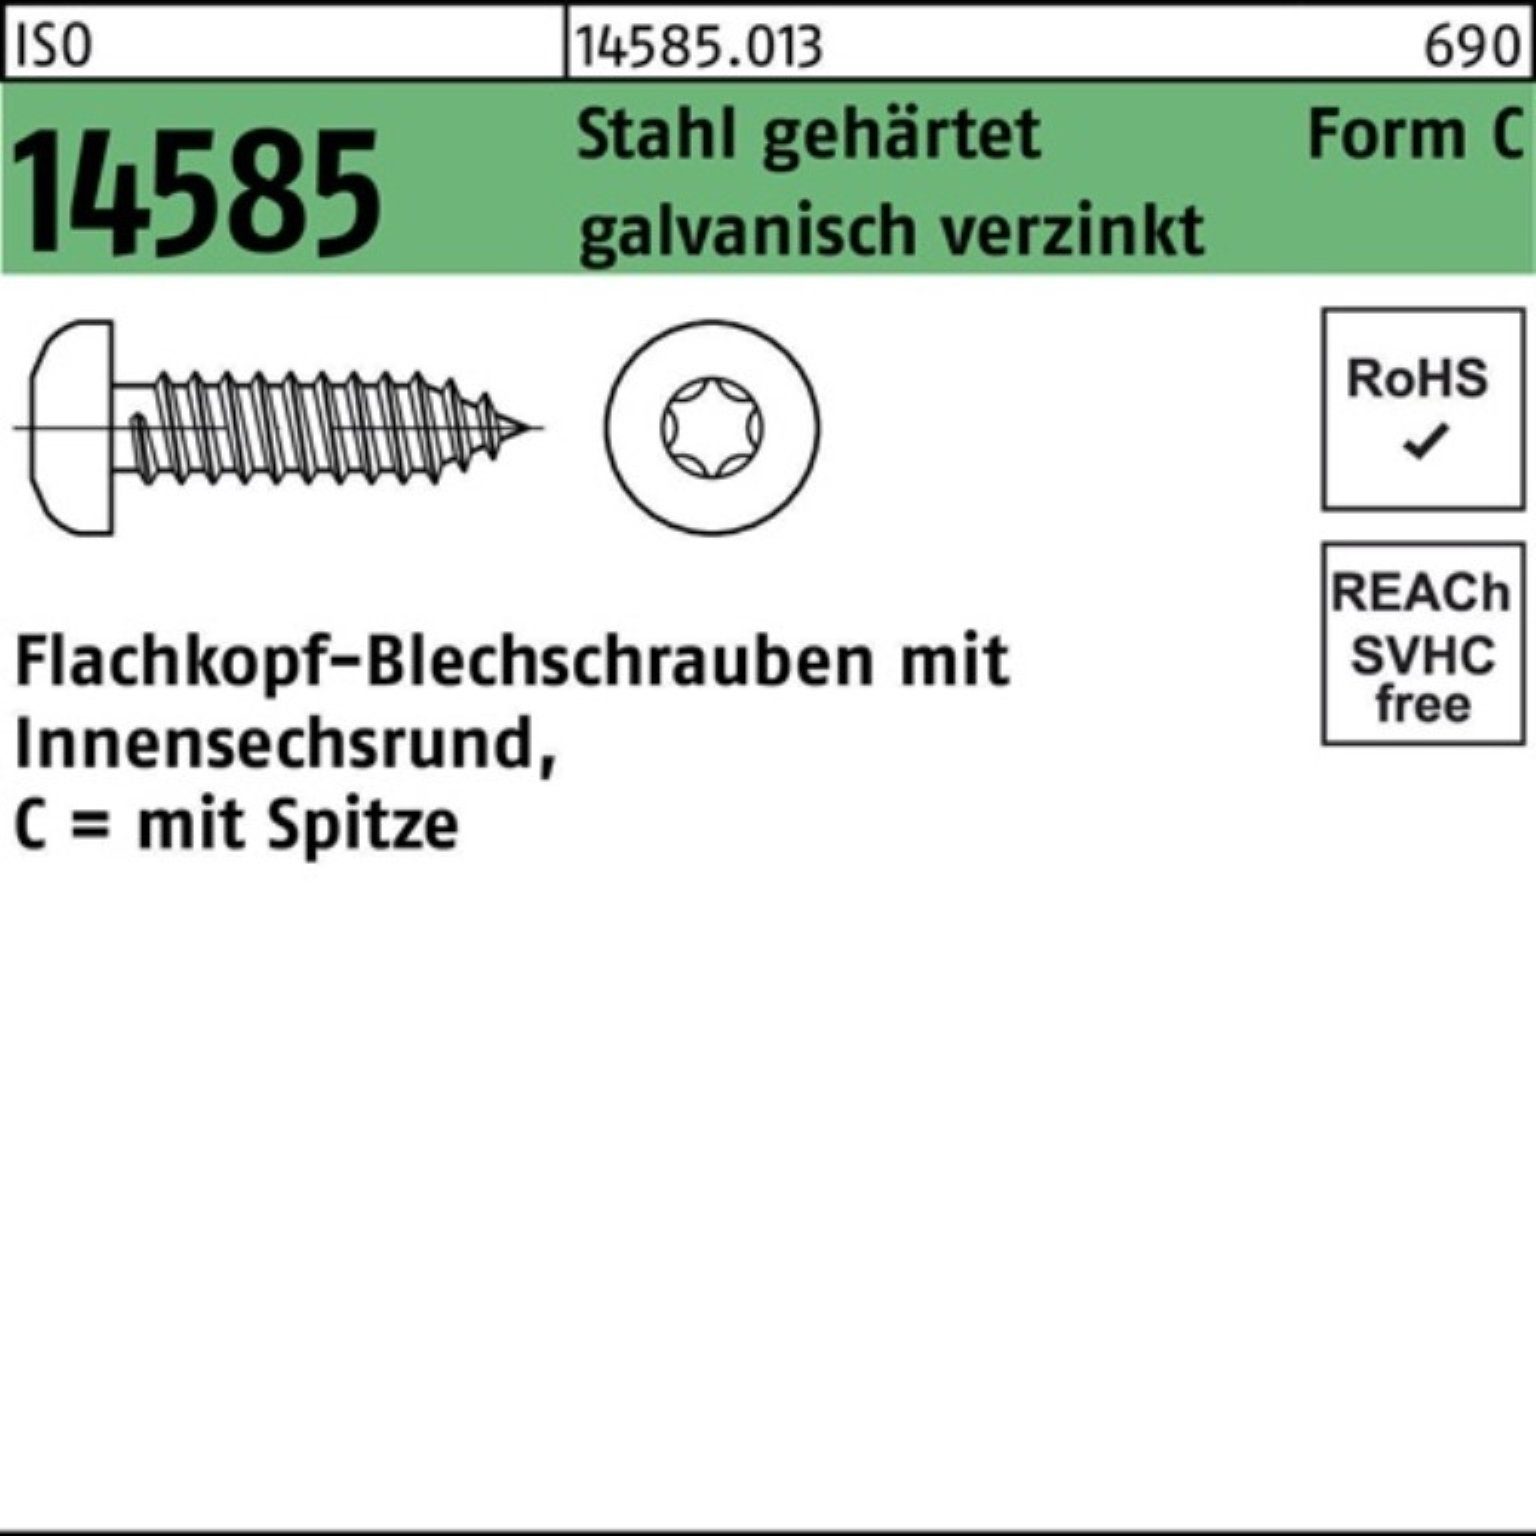 Reyher 250er Blechschraube -C-T30 ISR/Spitze 6,3x32 14585 geh. Stahl ISO Pack Blechschraube